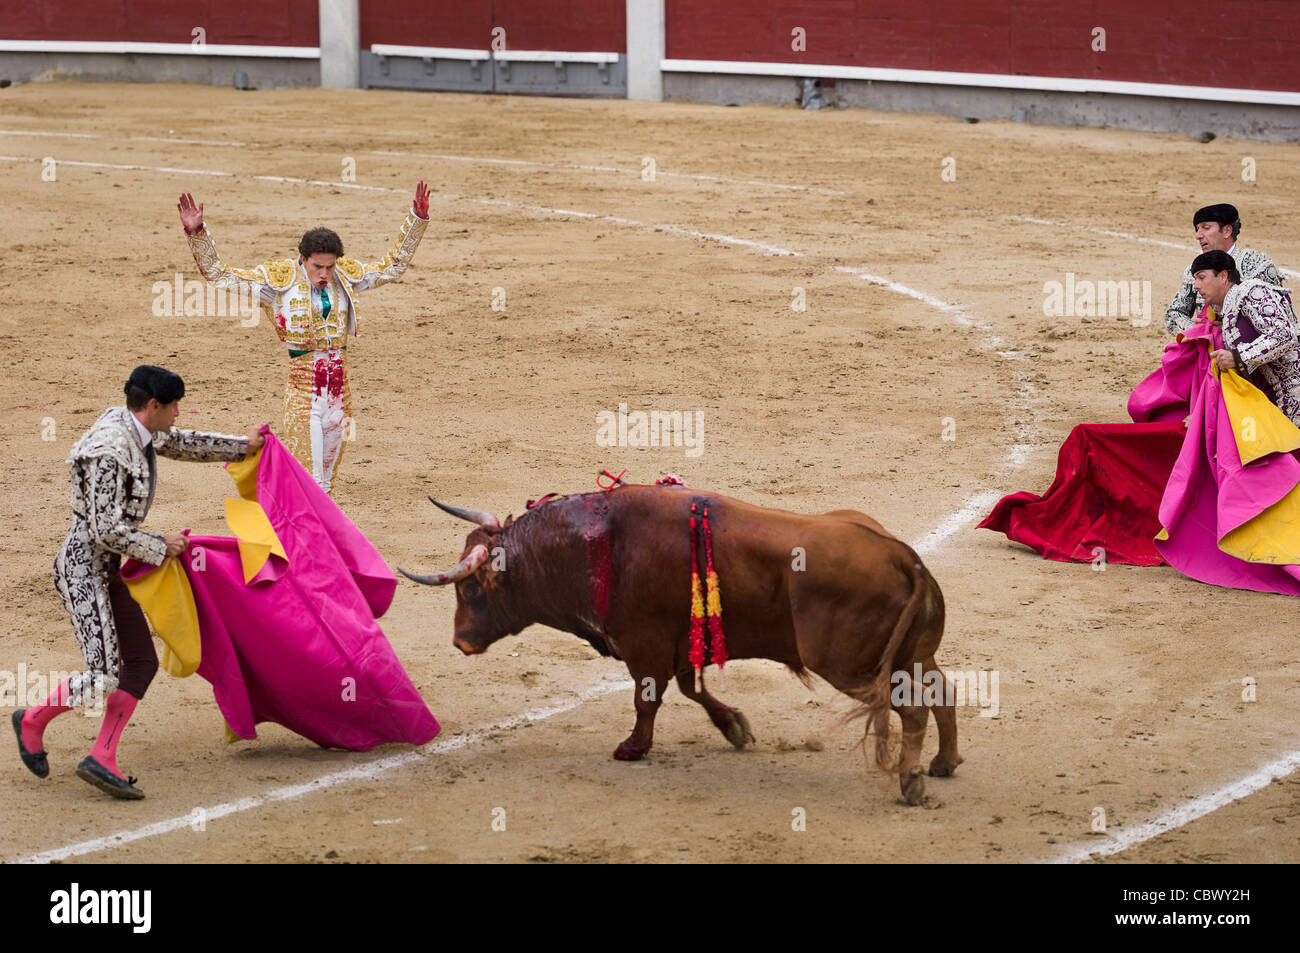 La corrida CORRIDA MADRID Spagna Foto Stock